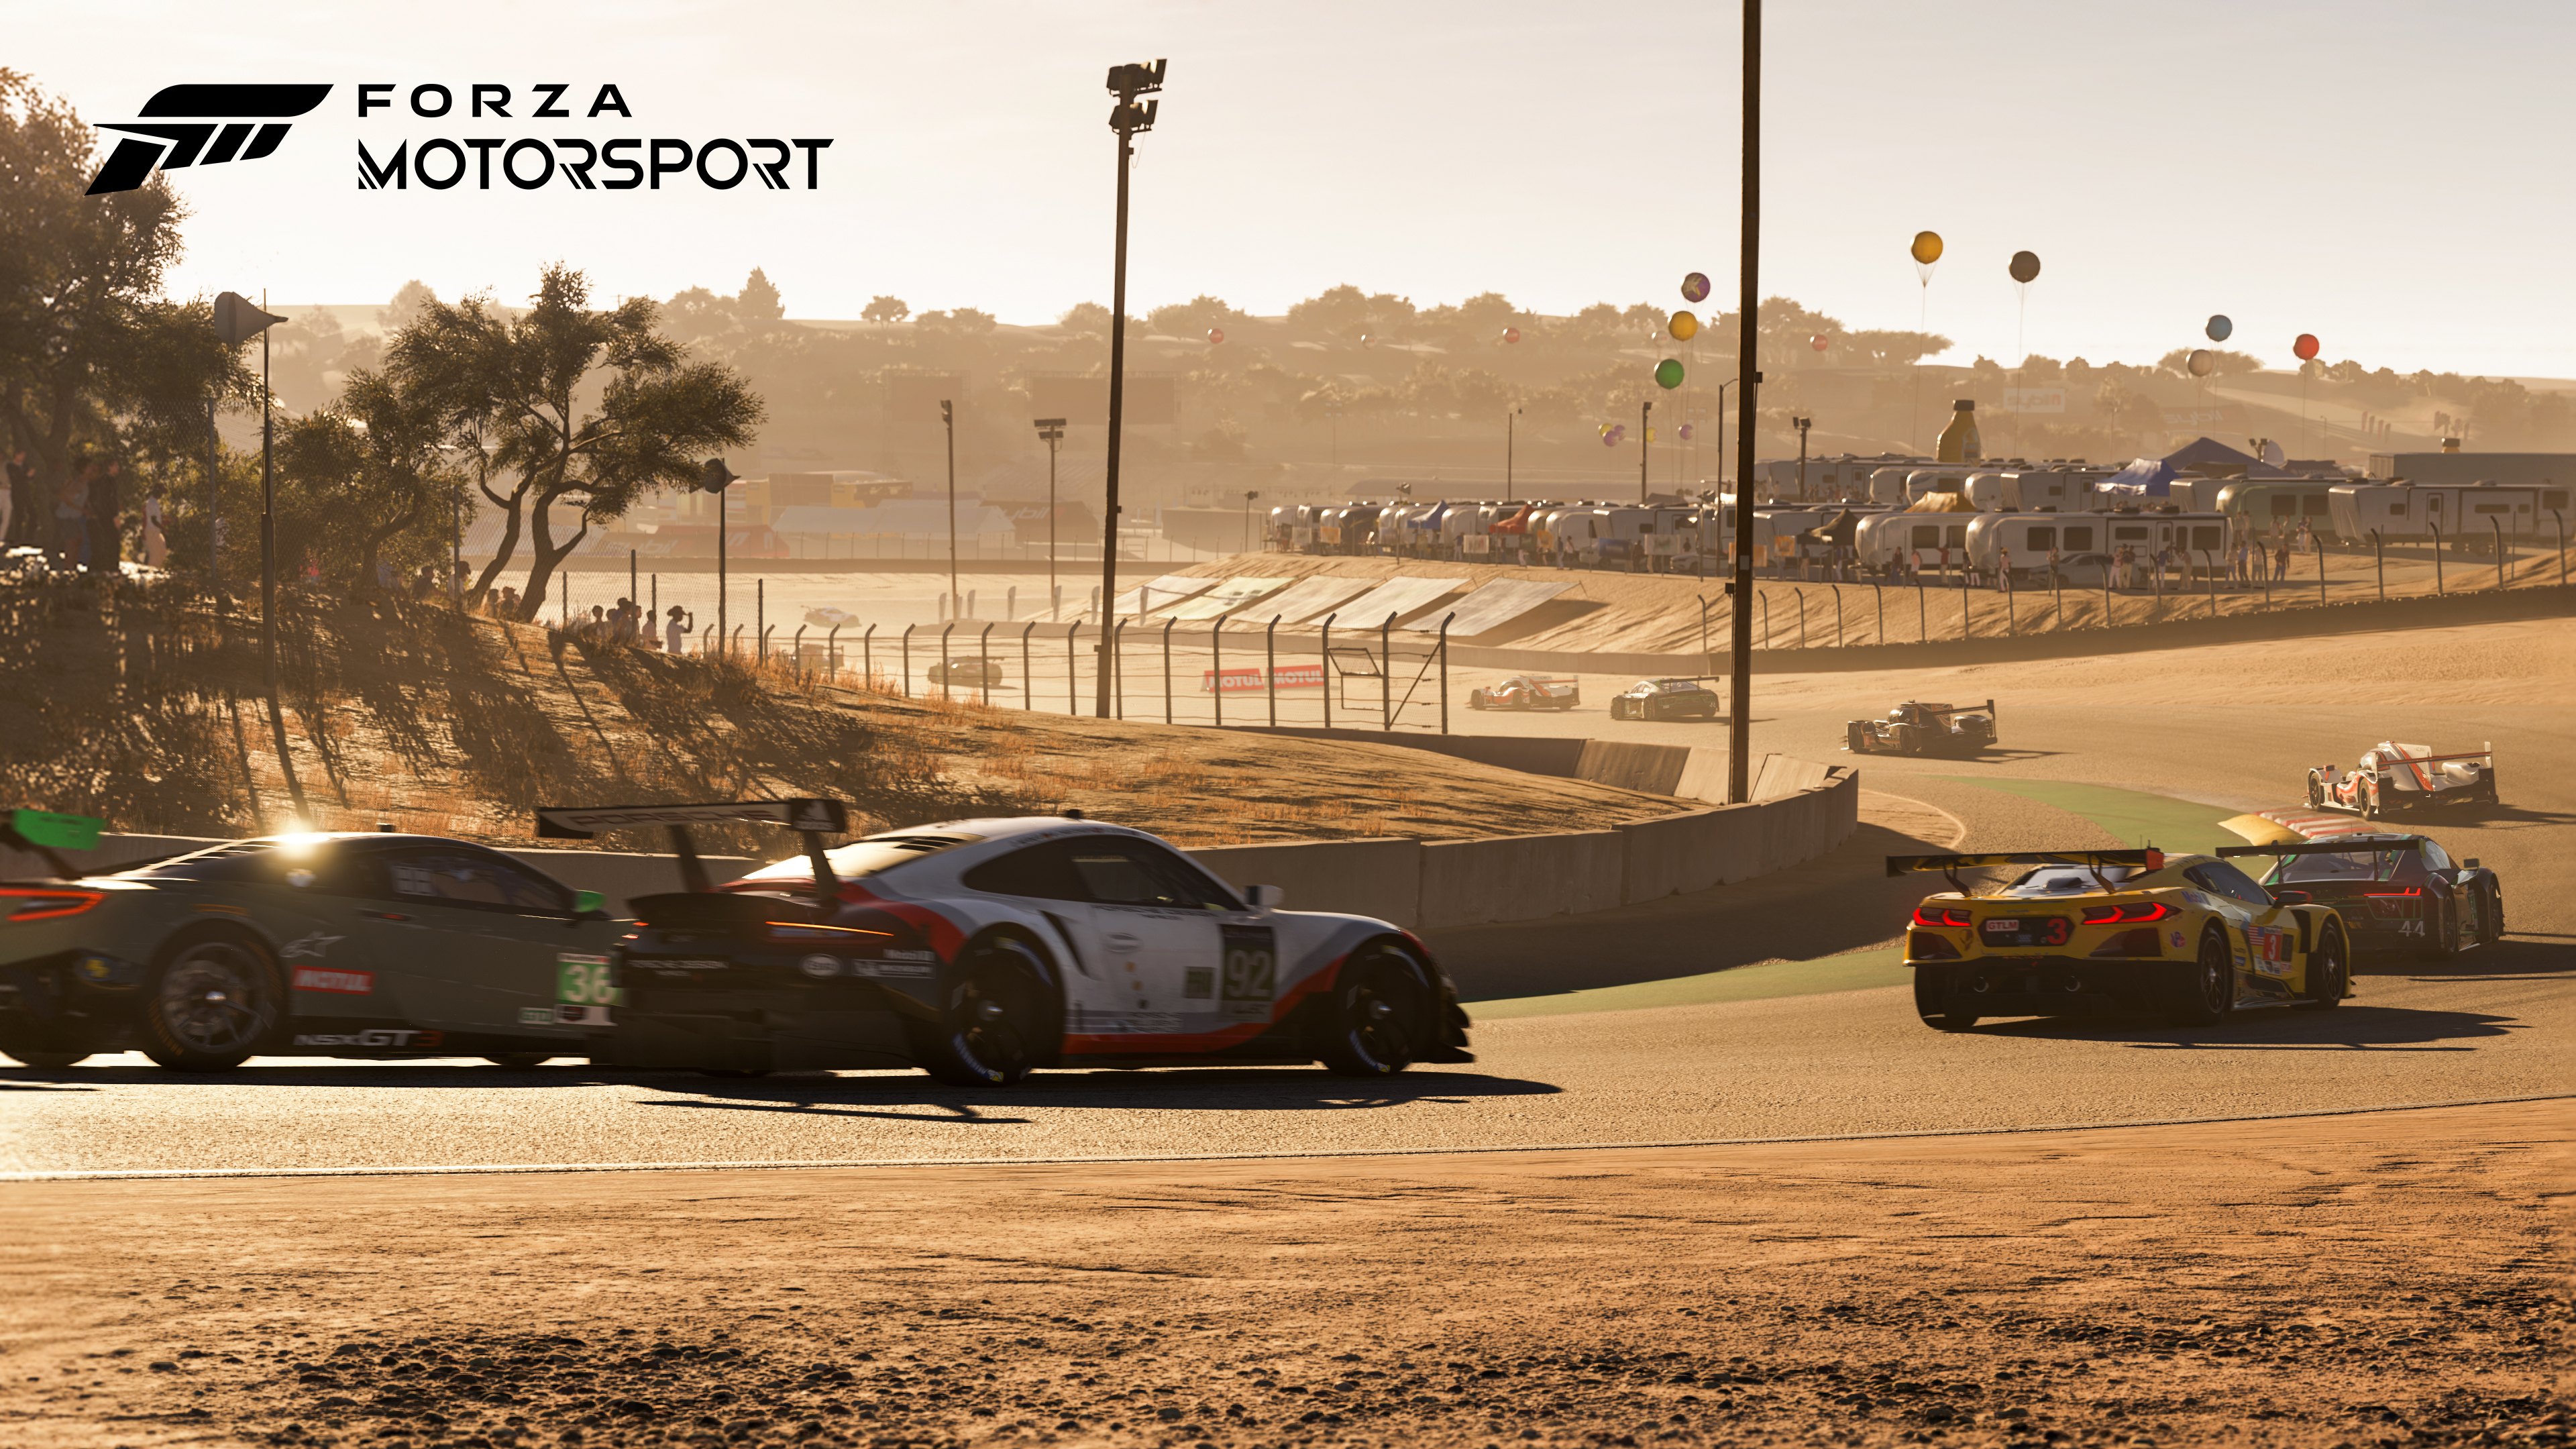 Forza-Motorsport-Xbox-Games-Showcase2022-Press-Kit-07-16x9-WM-65d9e47359a2ca761898.jpg